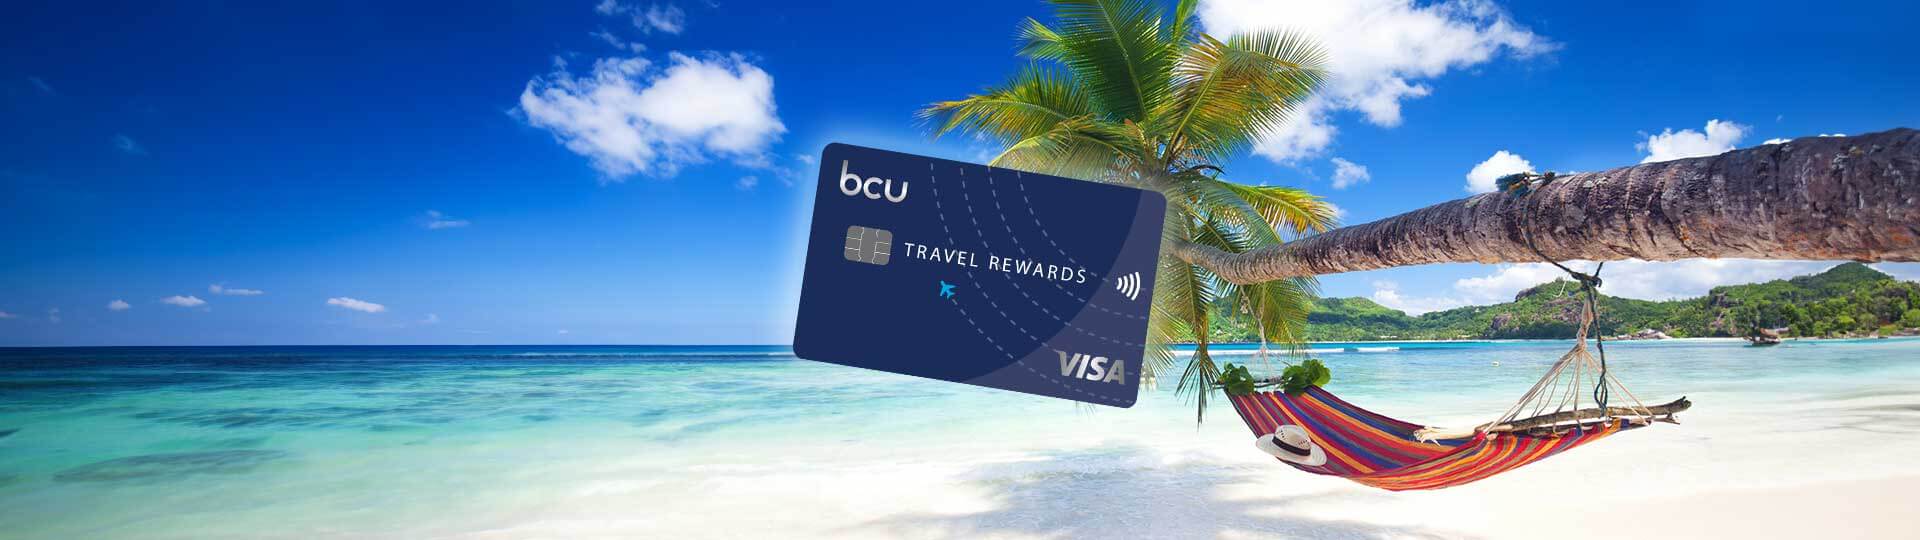 Visa Travel Rewards Credit Card